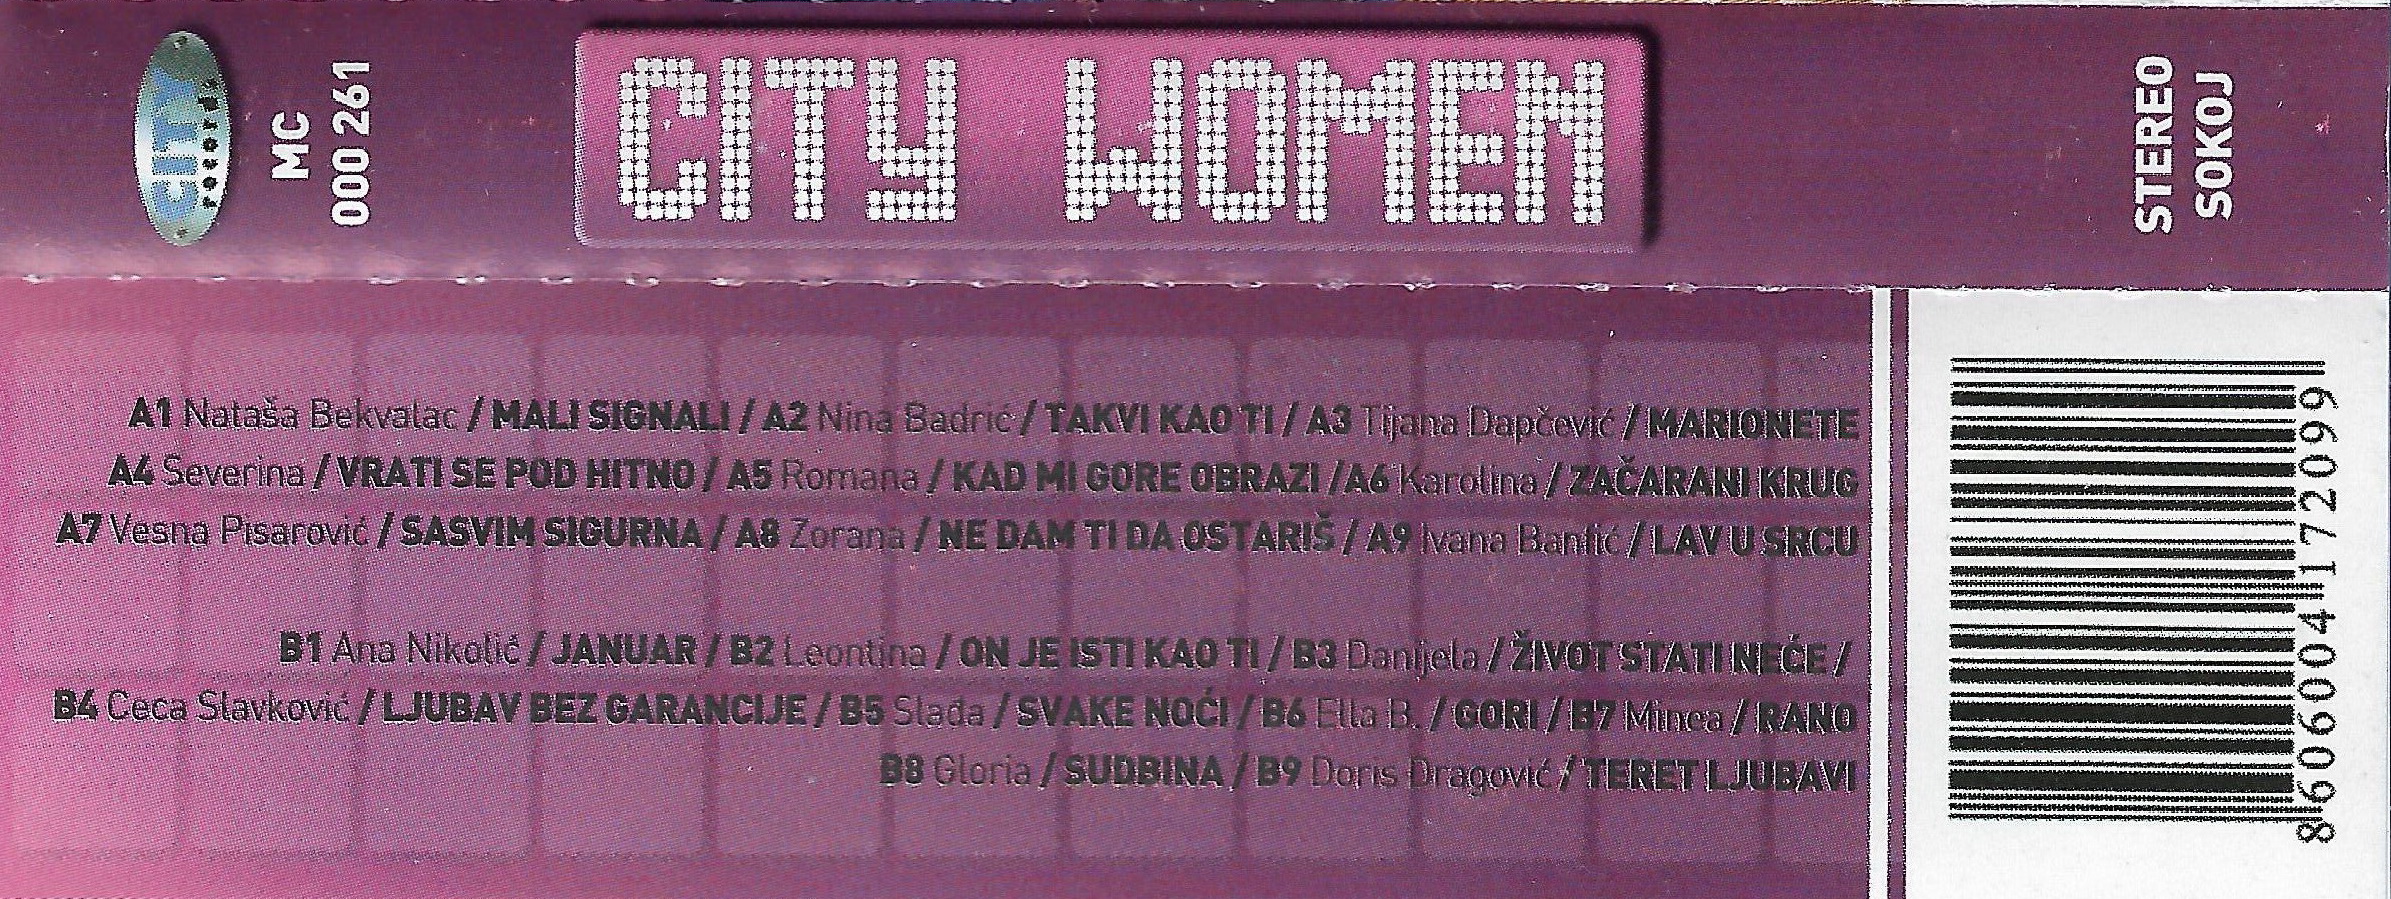 City Women 2003 1 b